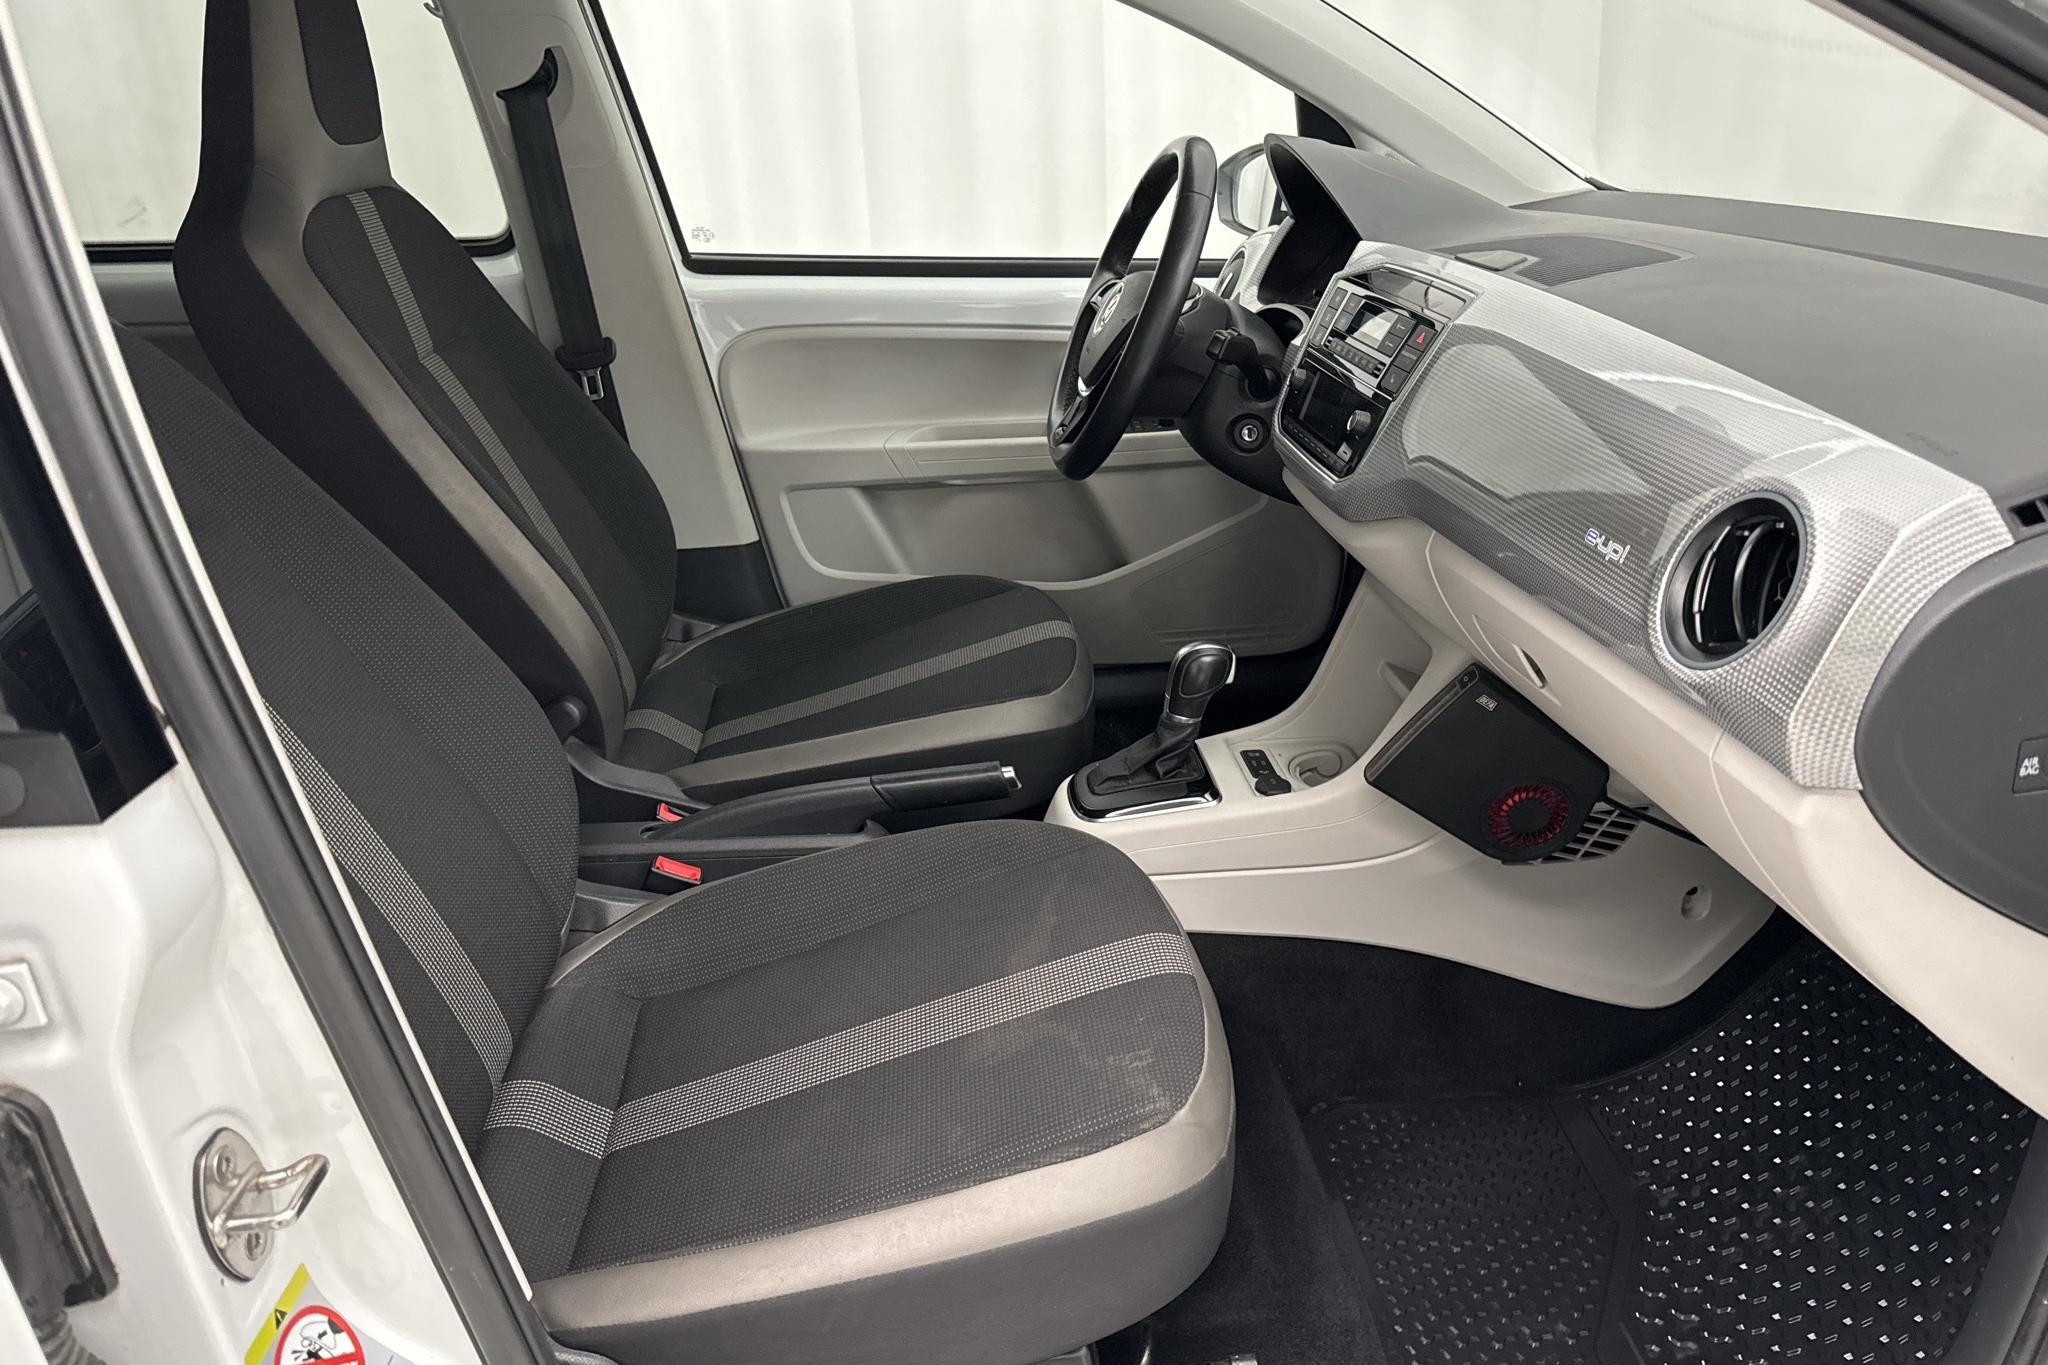 VW e-up! (83hk) - 17 940 km - Automatic - white - 2019